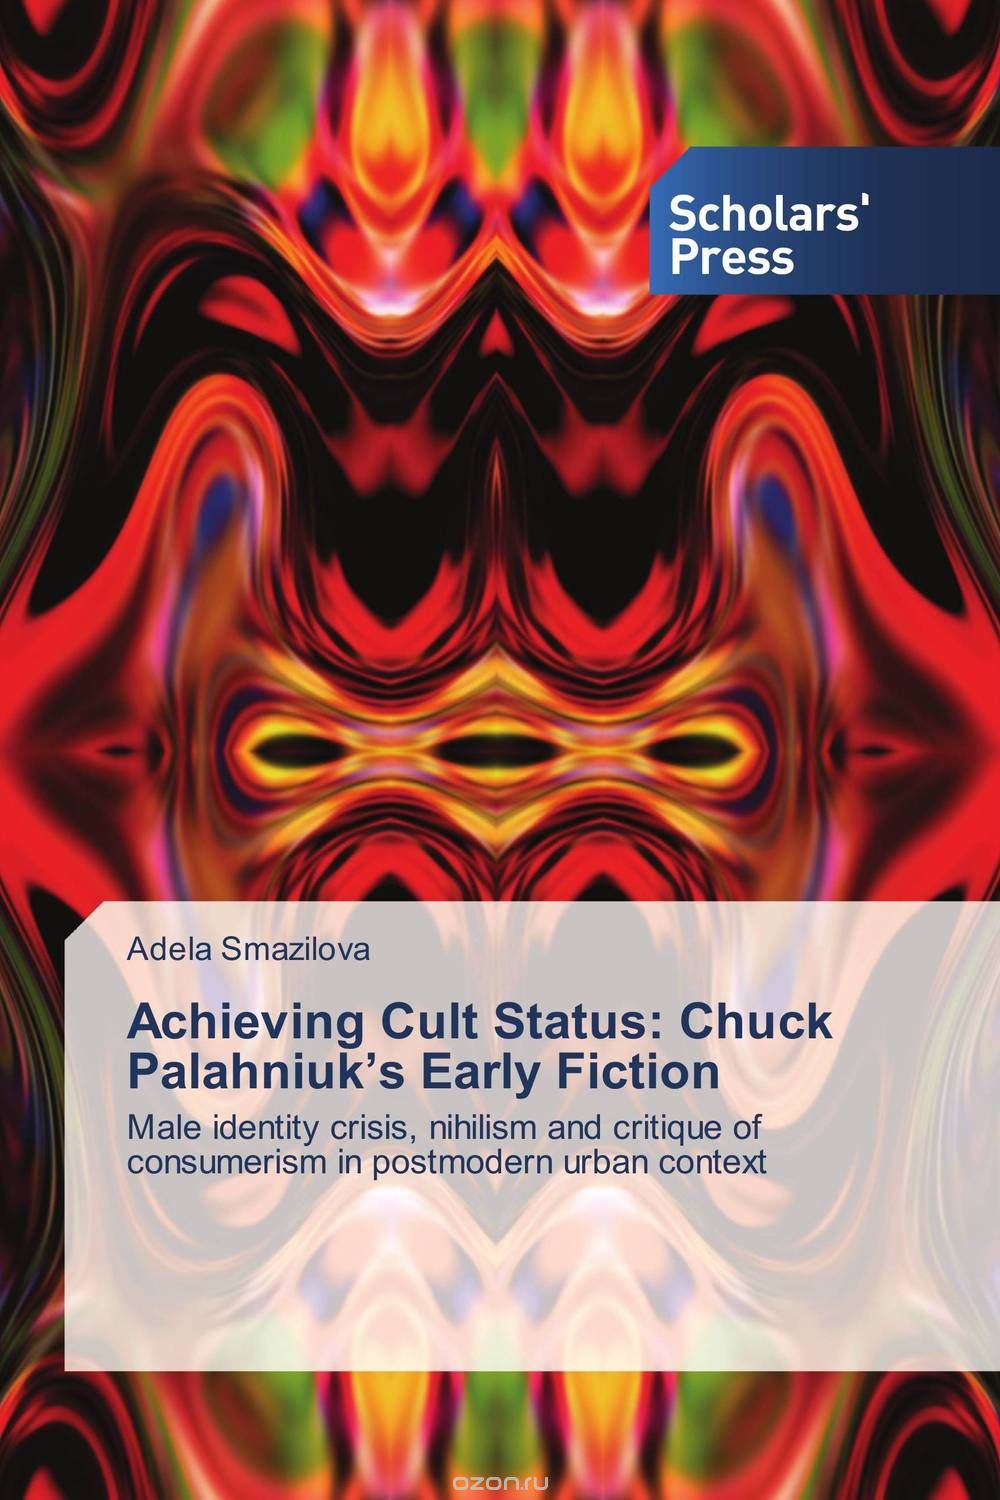 Скачать книгу "Achieving Cult Status: Chuck Palahniuk’s Early Fiction"